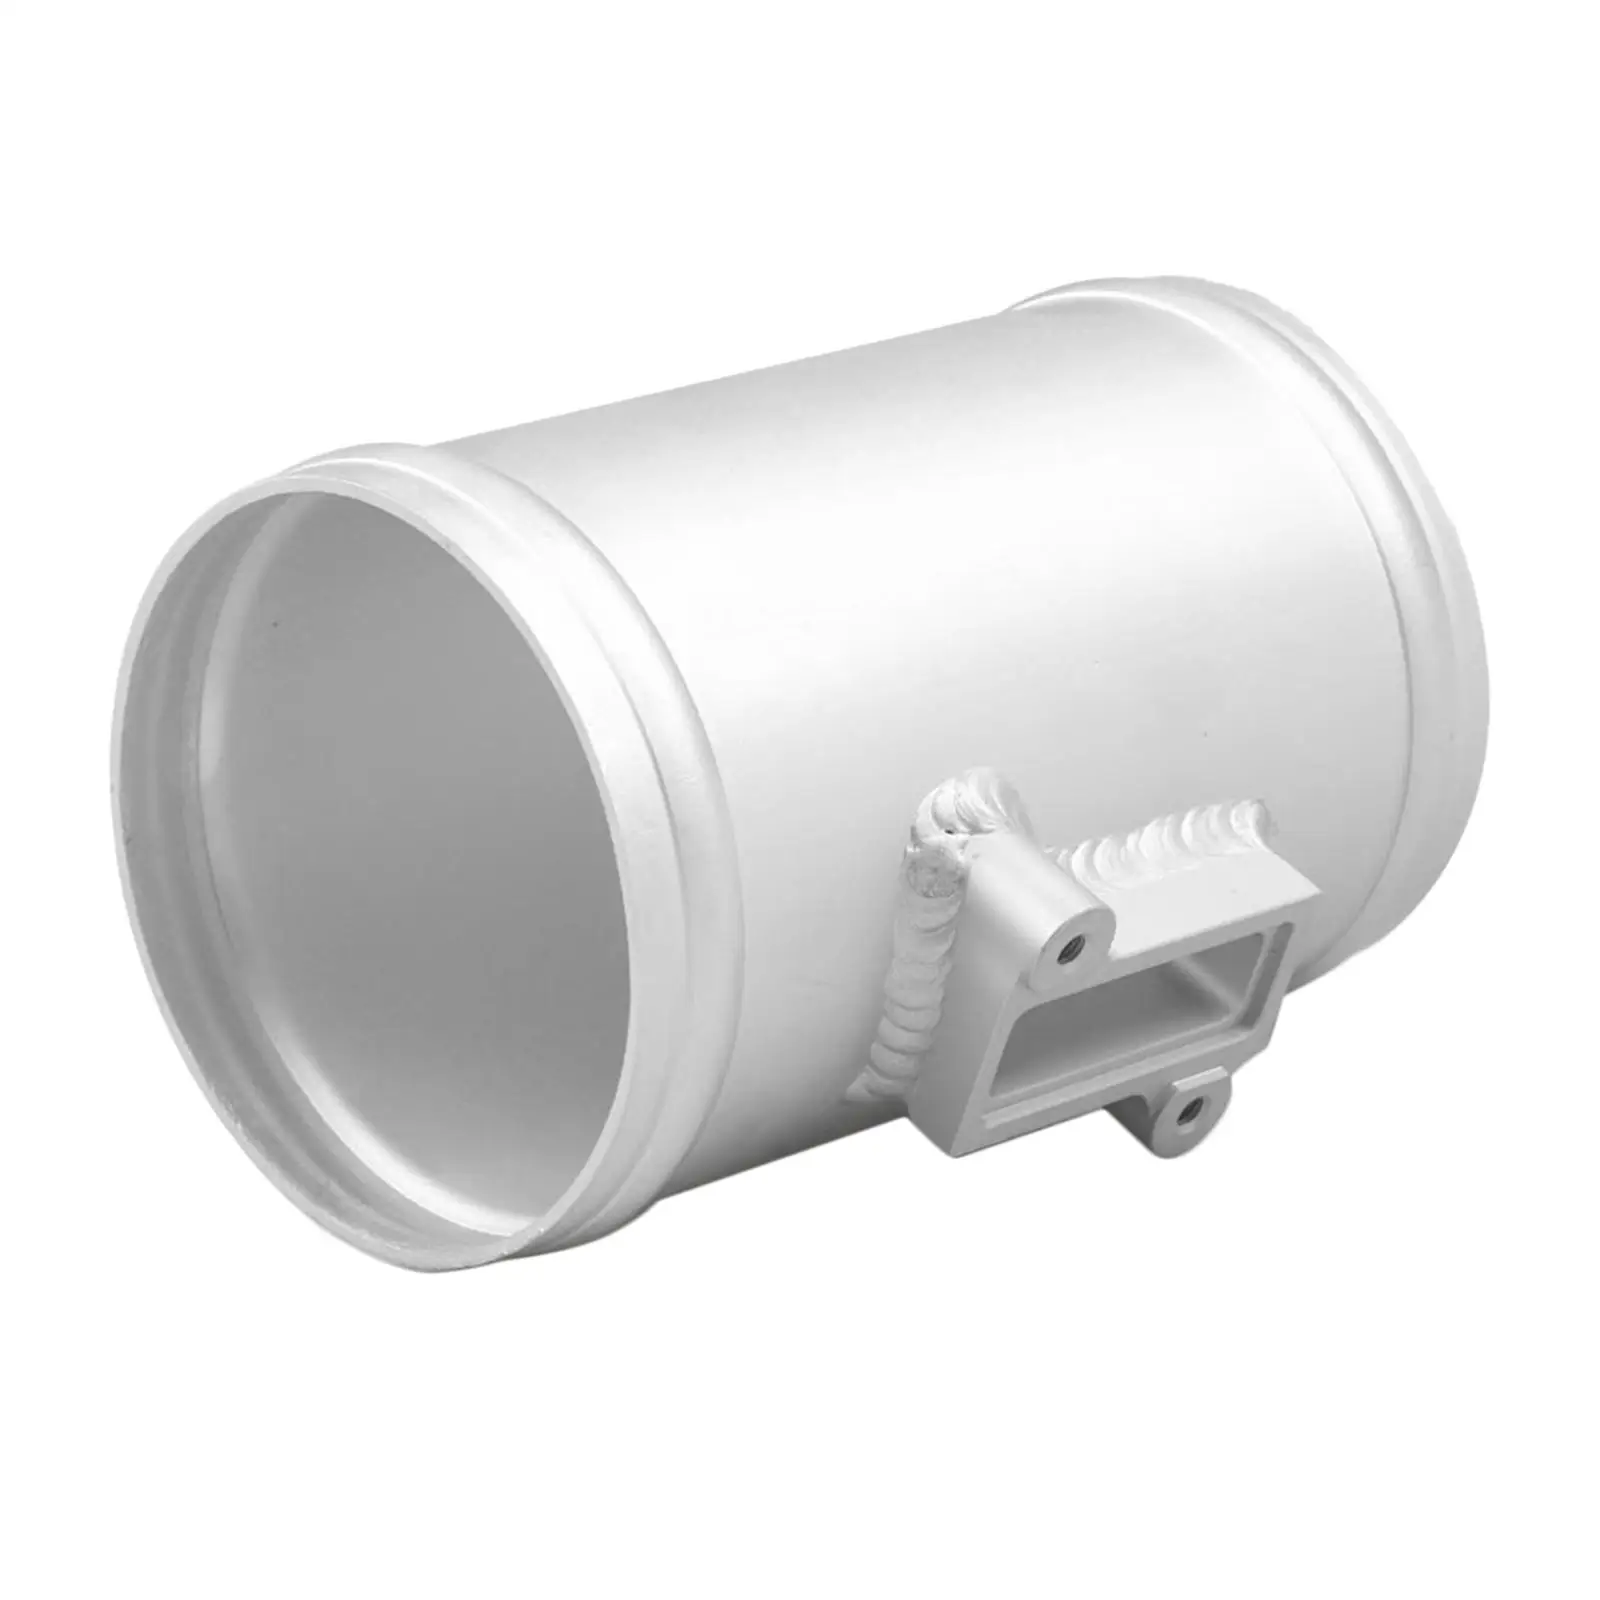 Maf air Flow Sensor Adapter Tube Replacement High Performance Aluminum Alloy